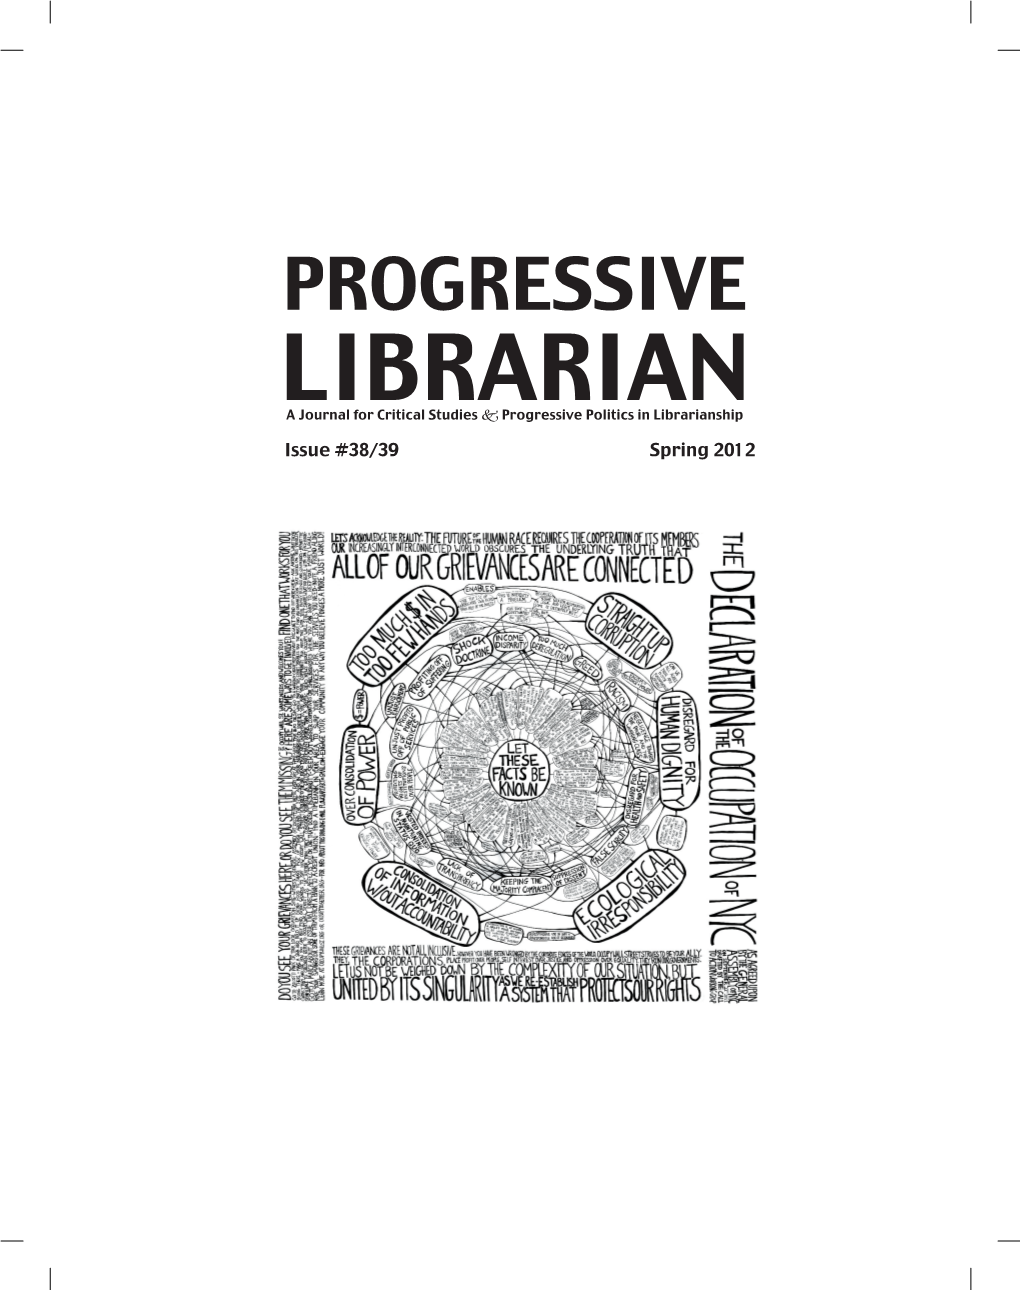 Progressive Librarian #38/39 Spring 2012